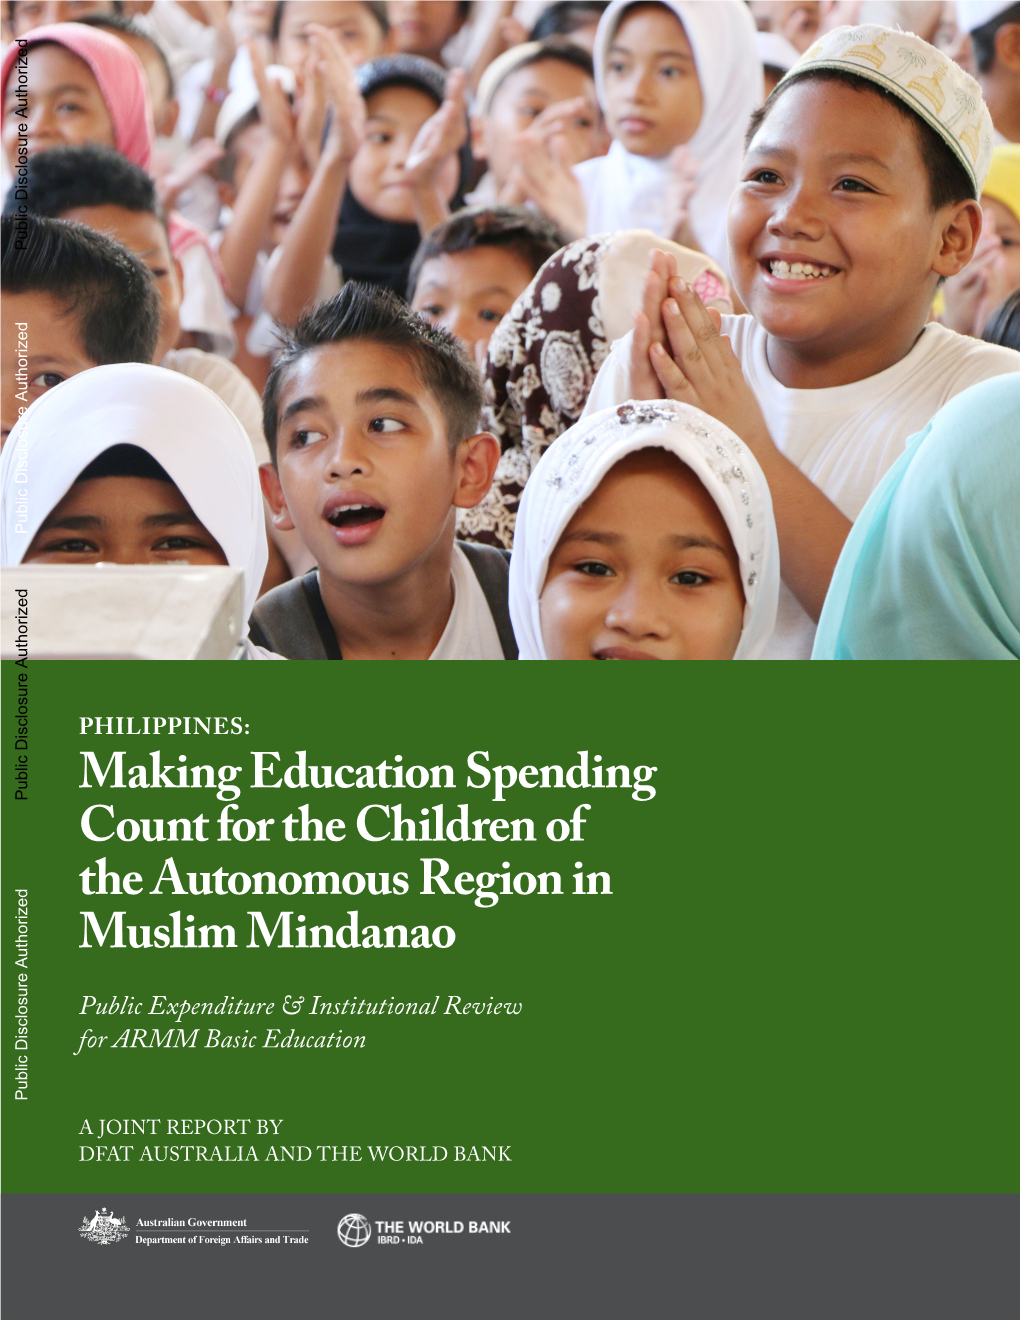 Making Education Spending Count for the Children of Autonomous Muslim Region of Mindanao